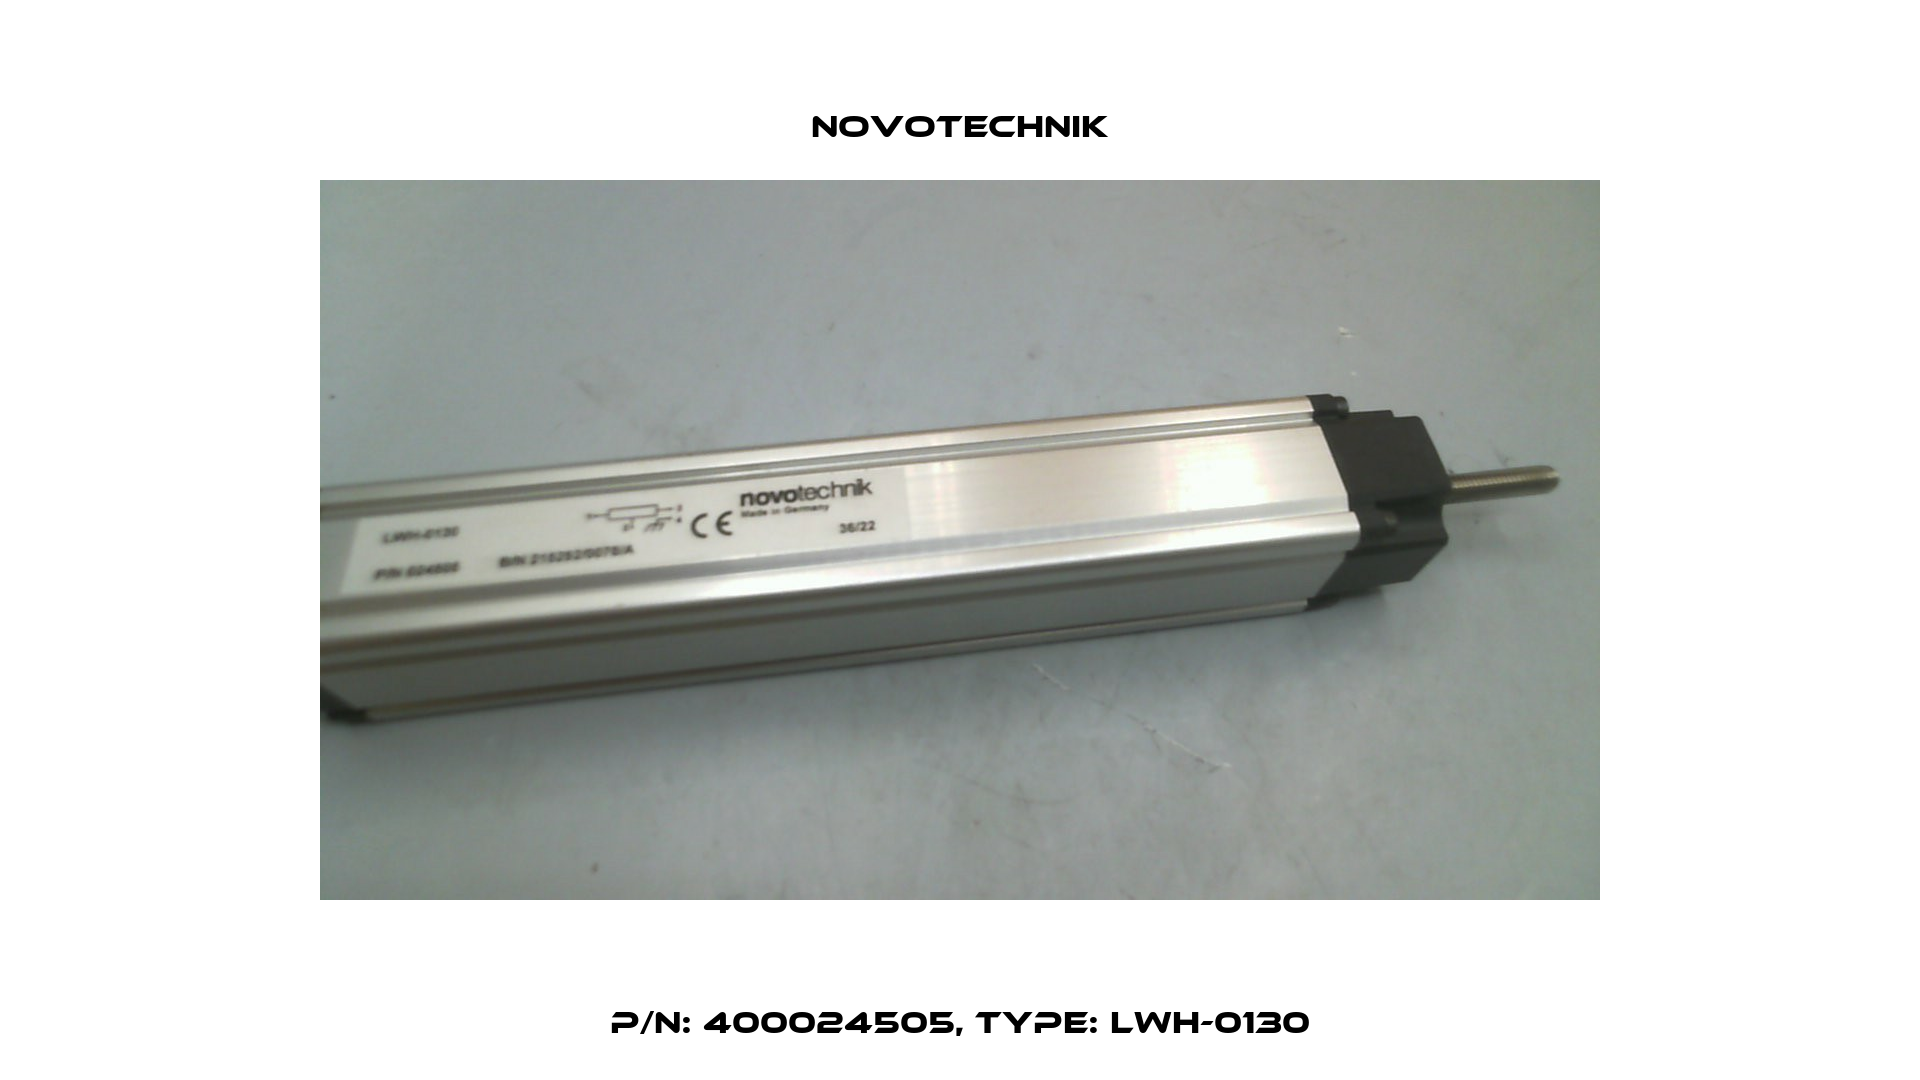 P/N: 400024505, Type: LWH-0130 Novotechnik